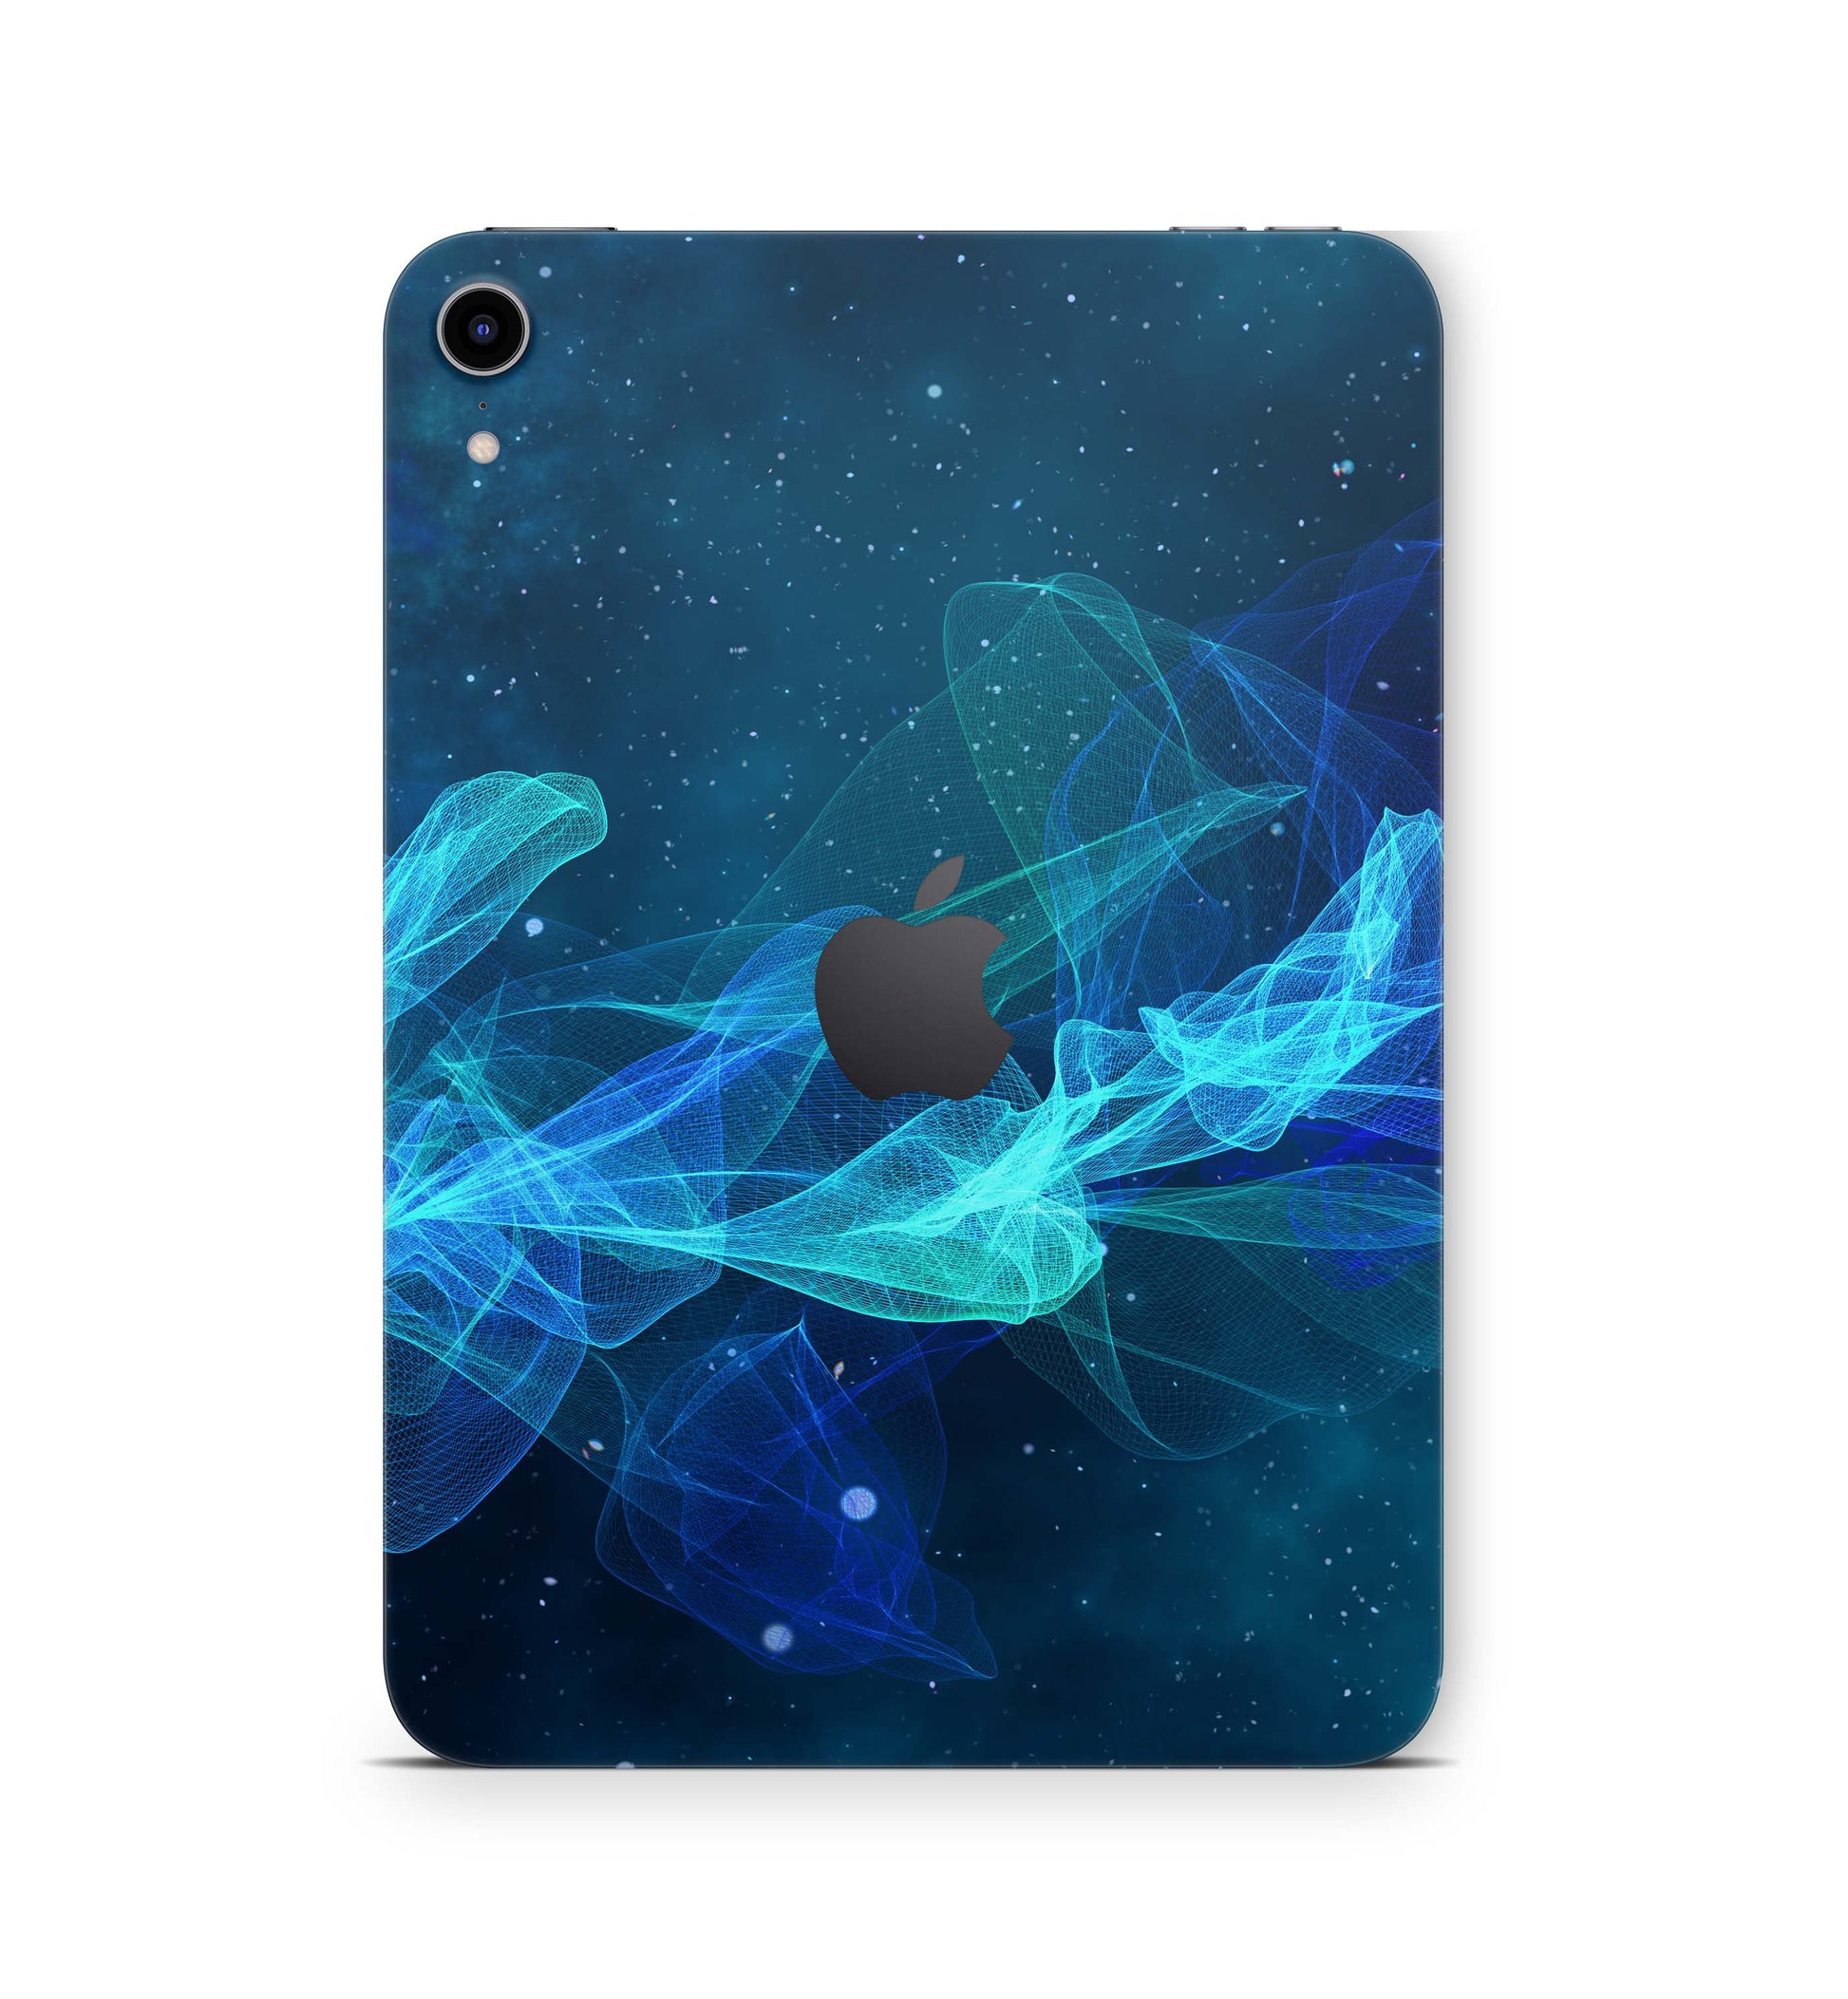 Apple iPad Skin Design Cover Folie Vinyl Skins & Wraps für alle iPad Modelle Aufkleber Skins4u Star-Spiral  